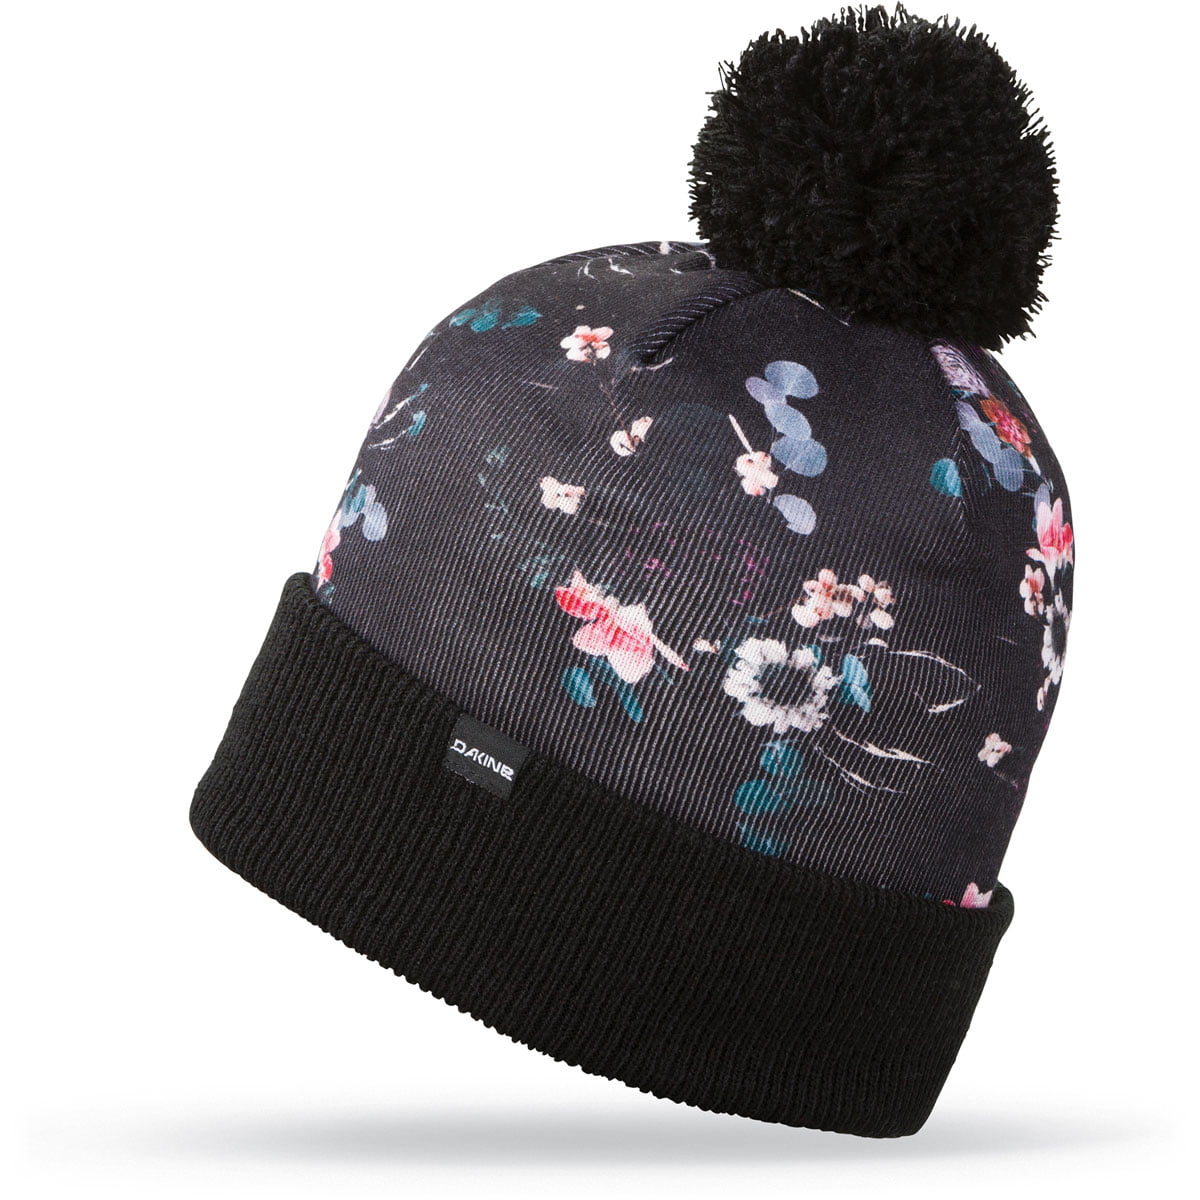 One Size Black Snow Hat Dakine Mens Hat Knitted Cap Winter Hat 